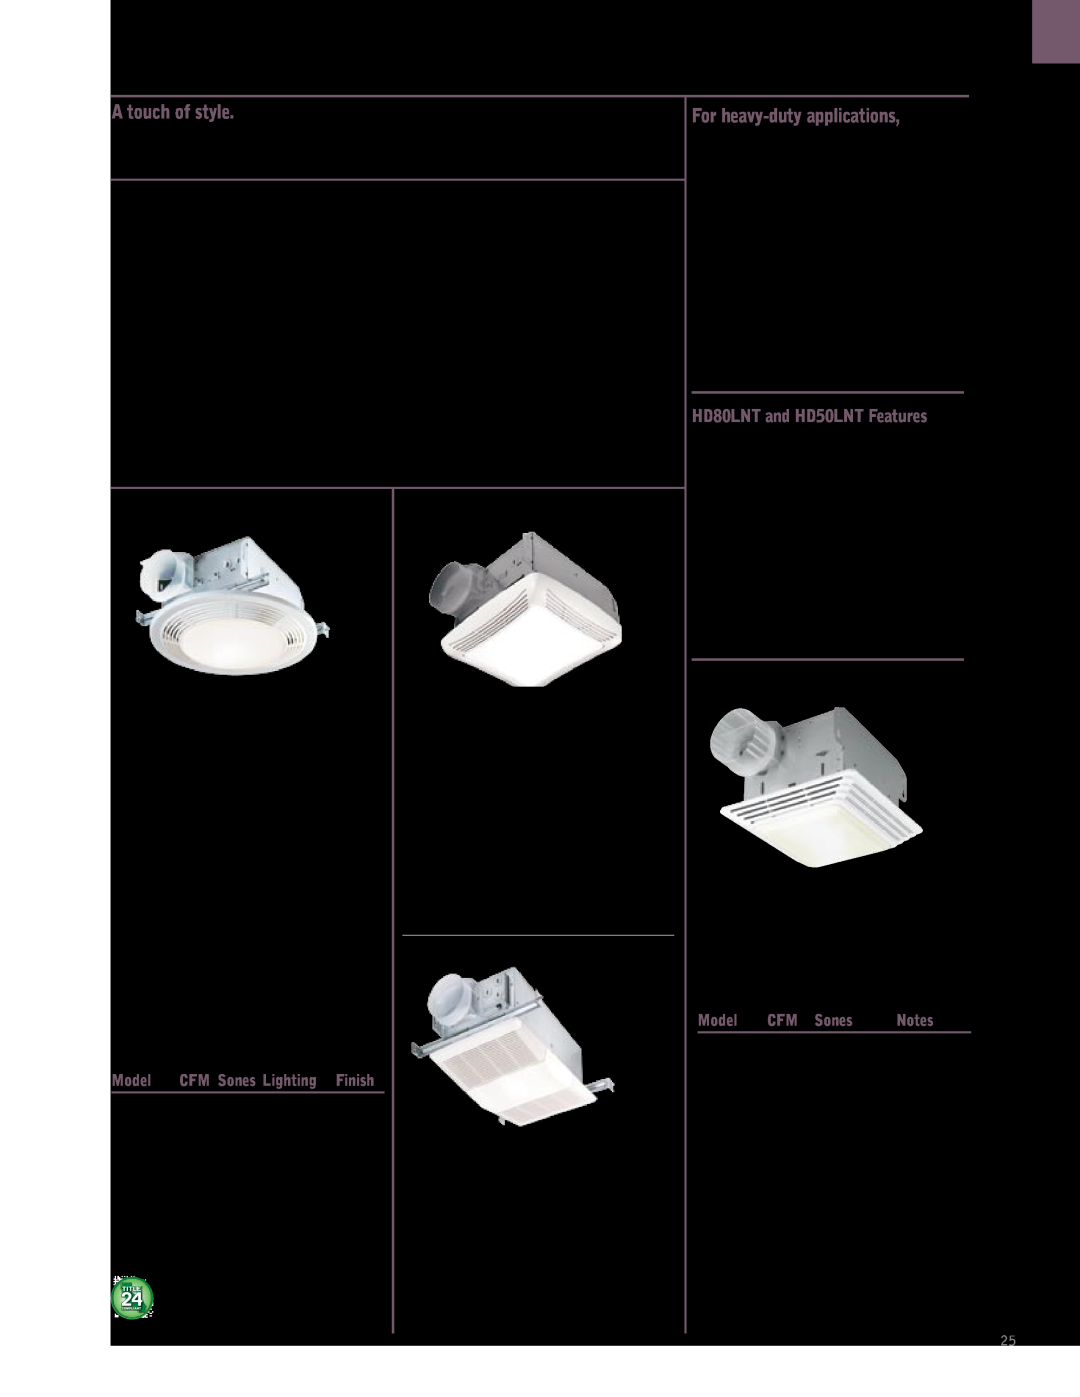 NuTone QTRN NuTone Ventilation Fan/Lights, Designer Fan/Light Combination Unit Features, HD80LNT and HD50LNT Features 